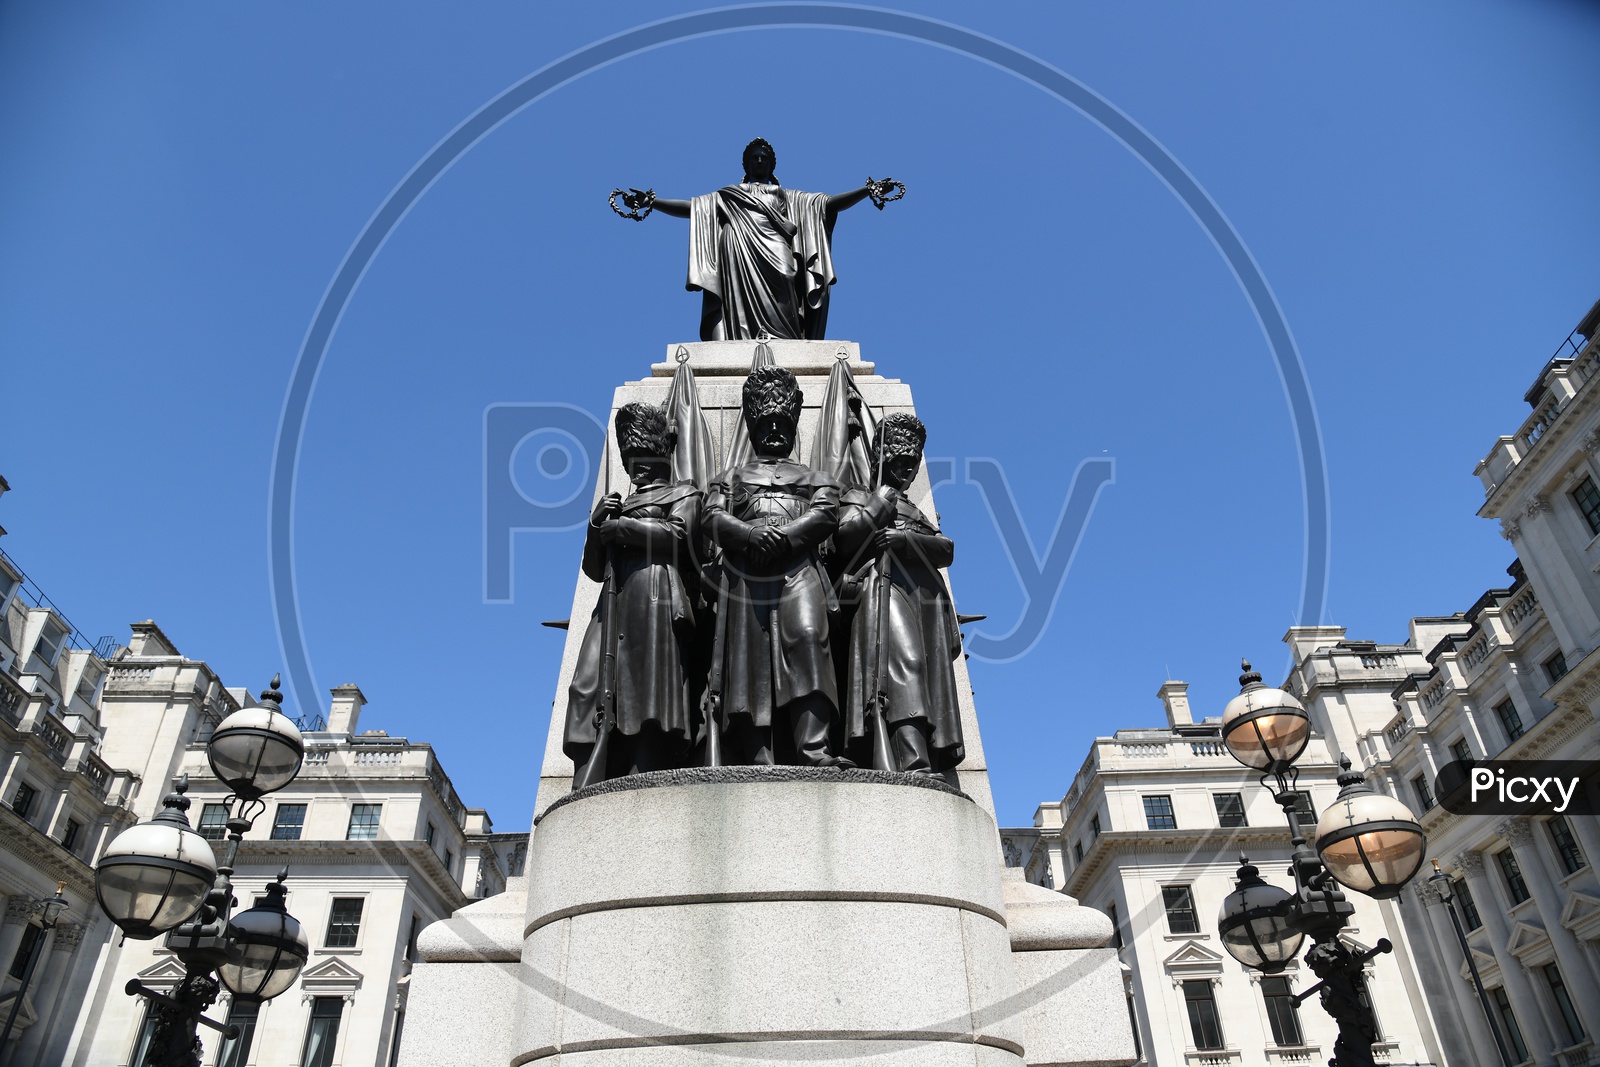 The Guards Crimean War Memorial Statue At St. James's , London